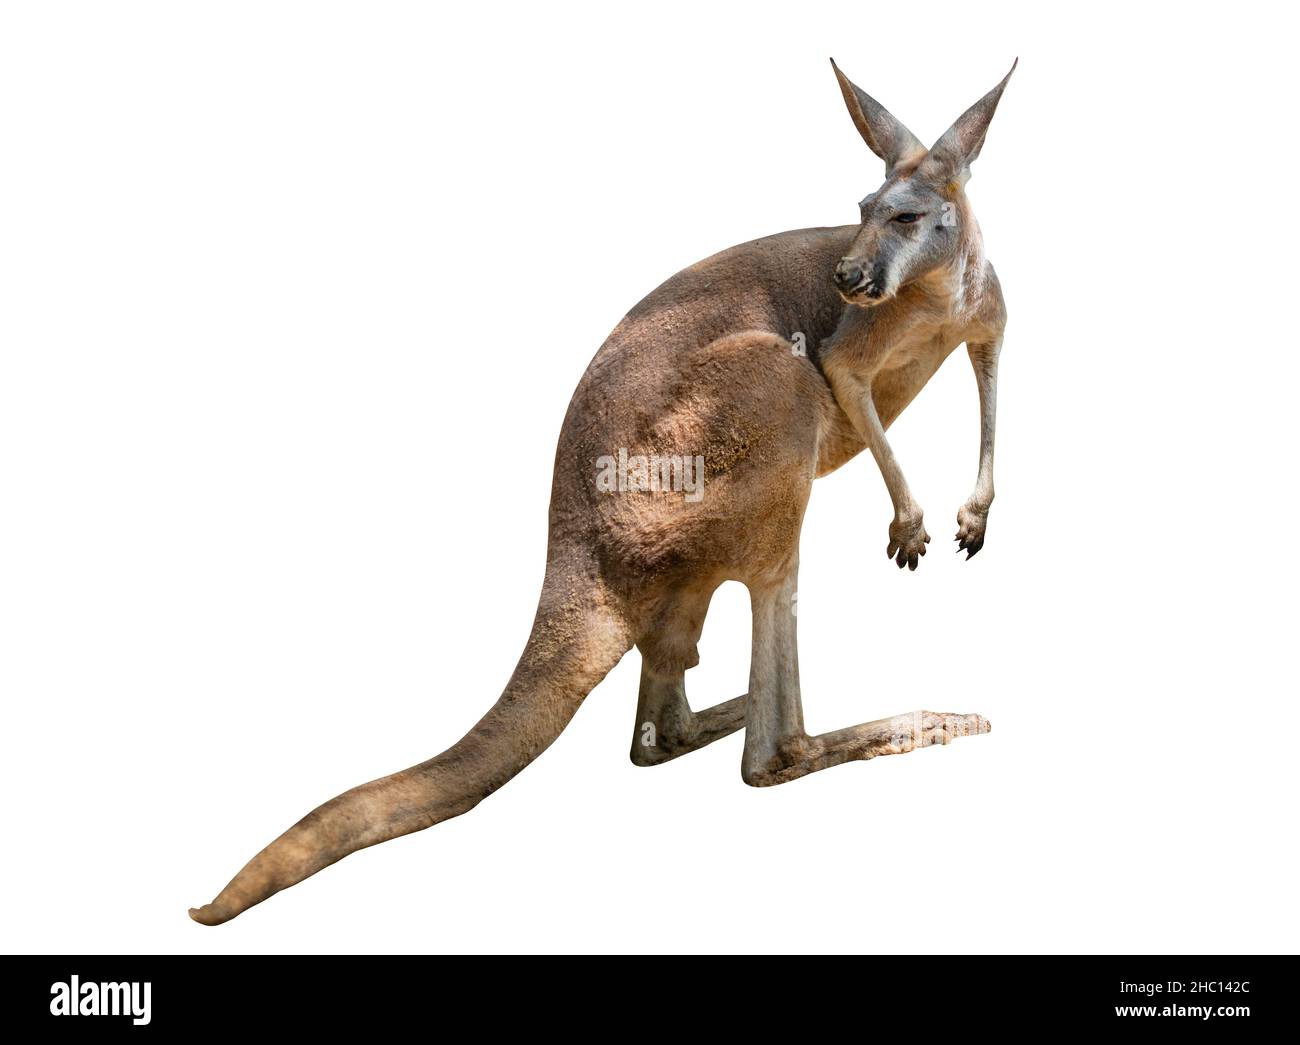 Kangaroo isolato, Kangaroo corpo intero su sfondo bianco, hanno luce naturale e ombra sul corpo di Kangaroo. Immagine di animali da zoo. Foto Stock